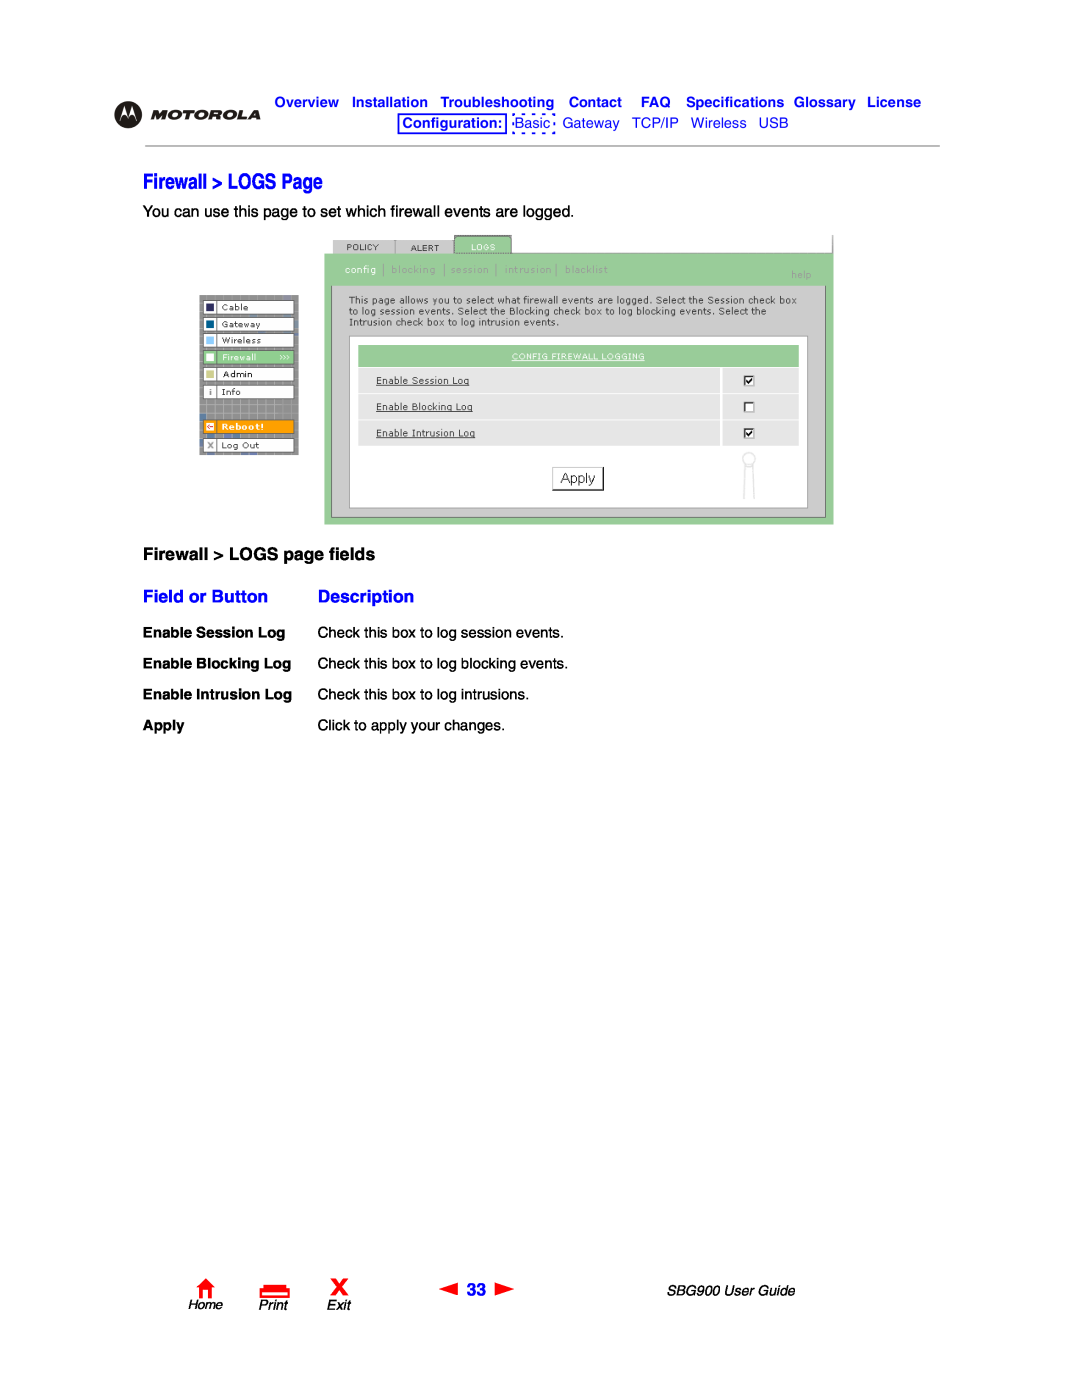 Motorola SBG900 manual Firewall LOGS Page, Firewall LOGS page fields, Field or Button, Description, Home Print Exit 